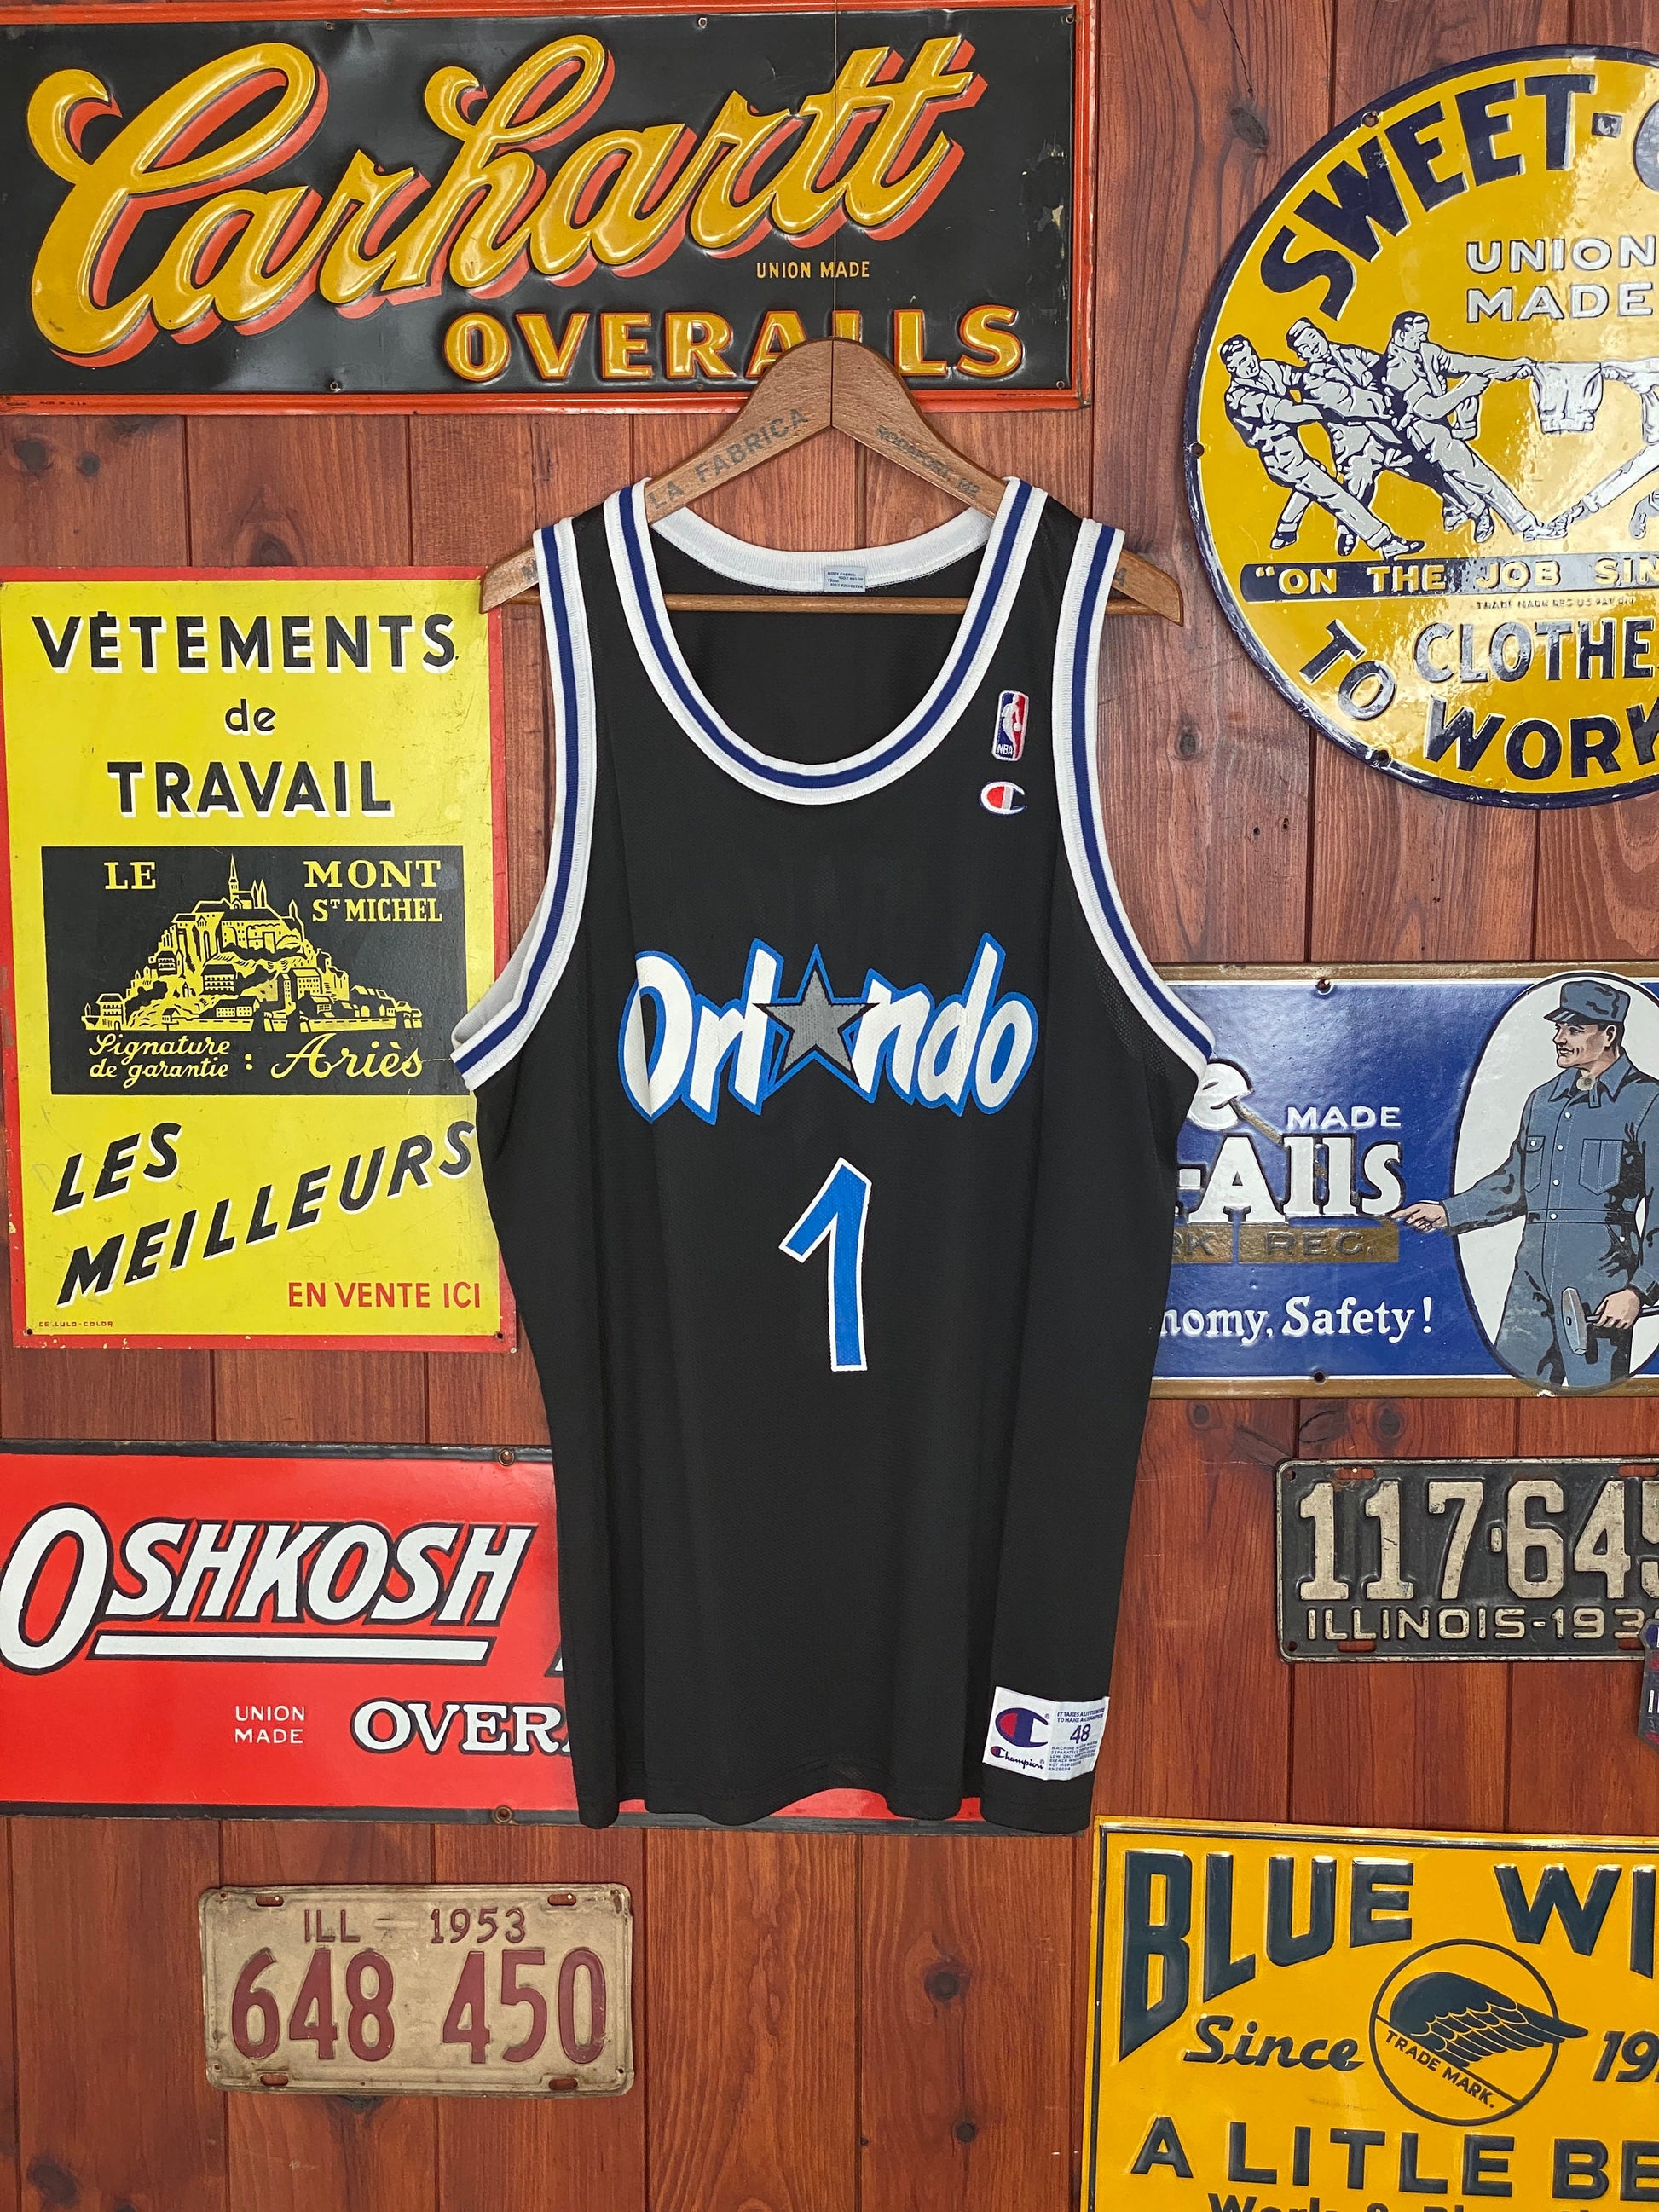 90s Vintage Orlando NBA #1 Hardaway Champion Jersey - Size 48